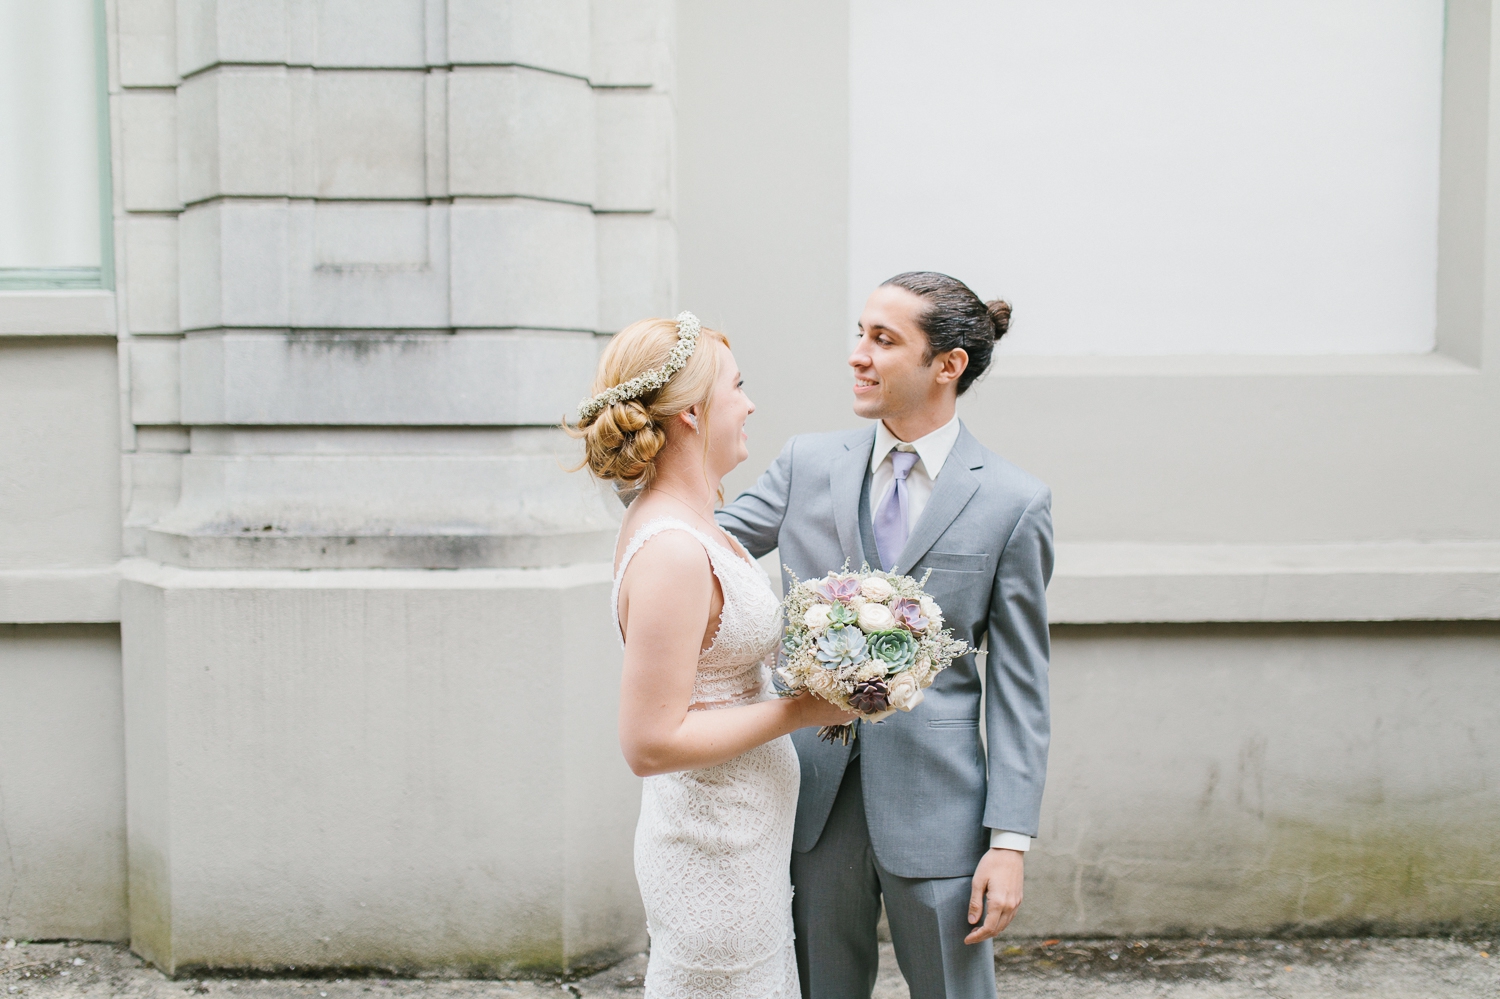 Centralia Square Grand Ballroom and Hotel Wedding | Succulent Wedding | Seattle Wedding Photographer | Hotel Wedding Pacific Northwest 61.jpg